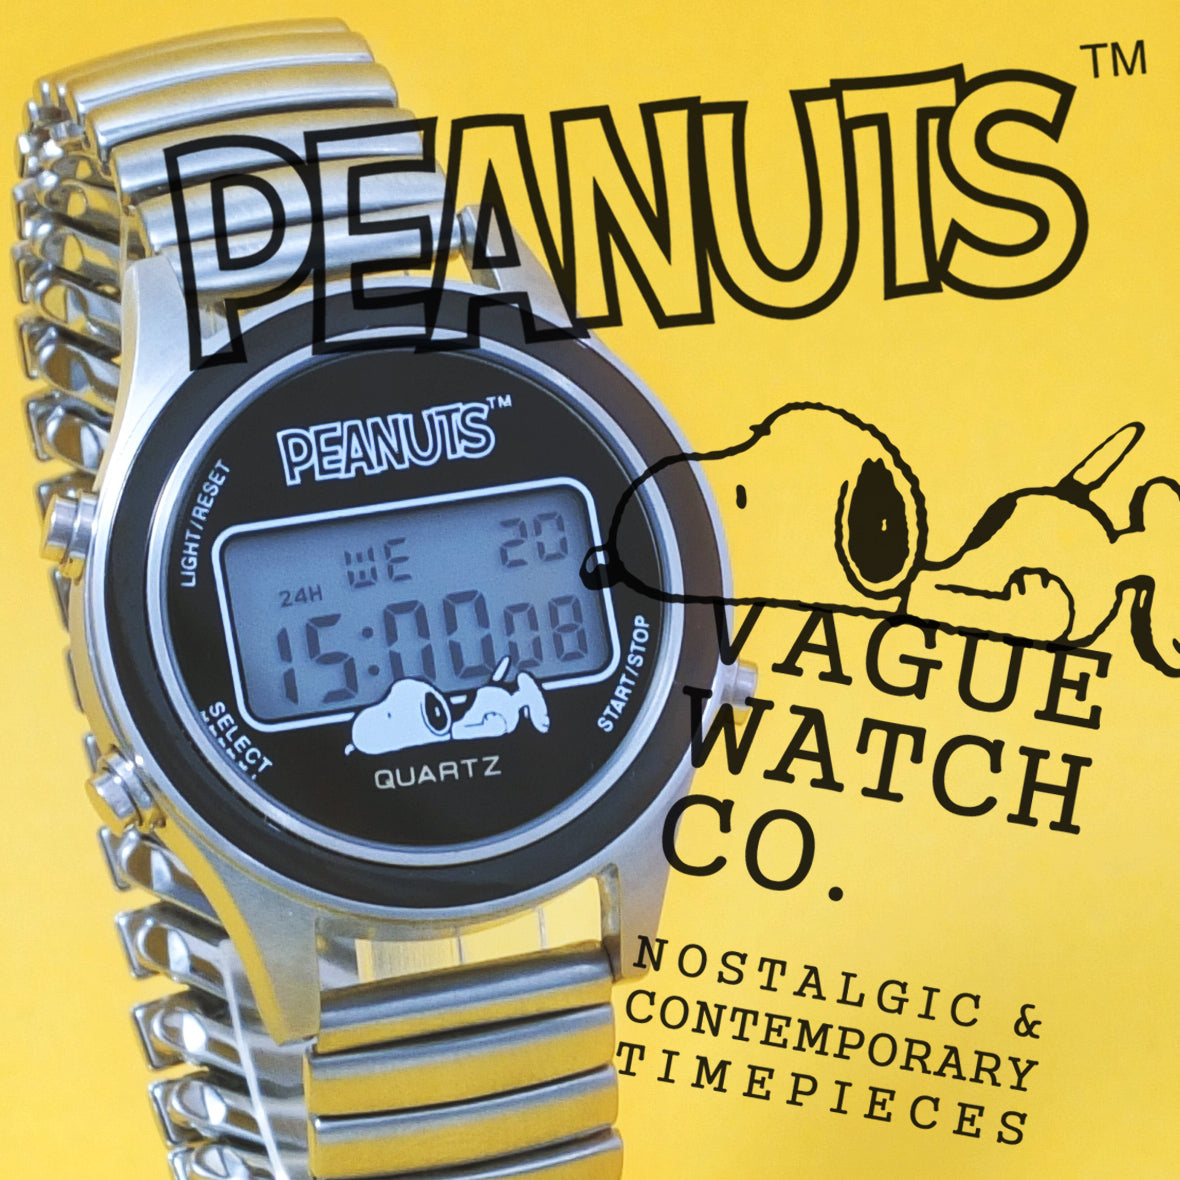 Snoopy Digital Watch “ DG2000 Extension – VAGUE WATCH CO.